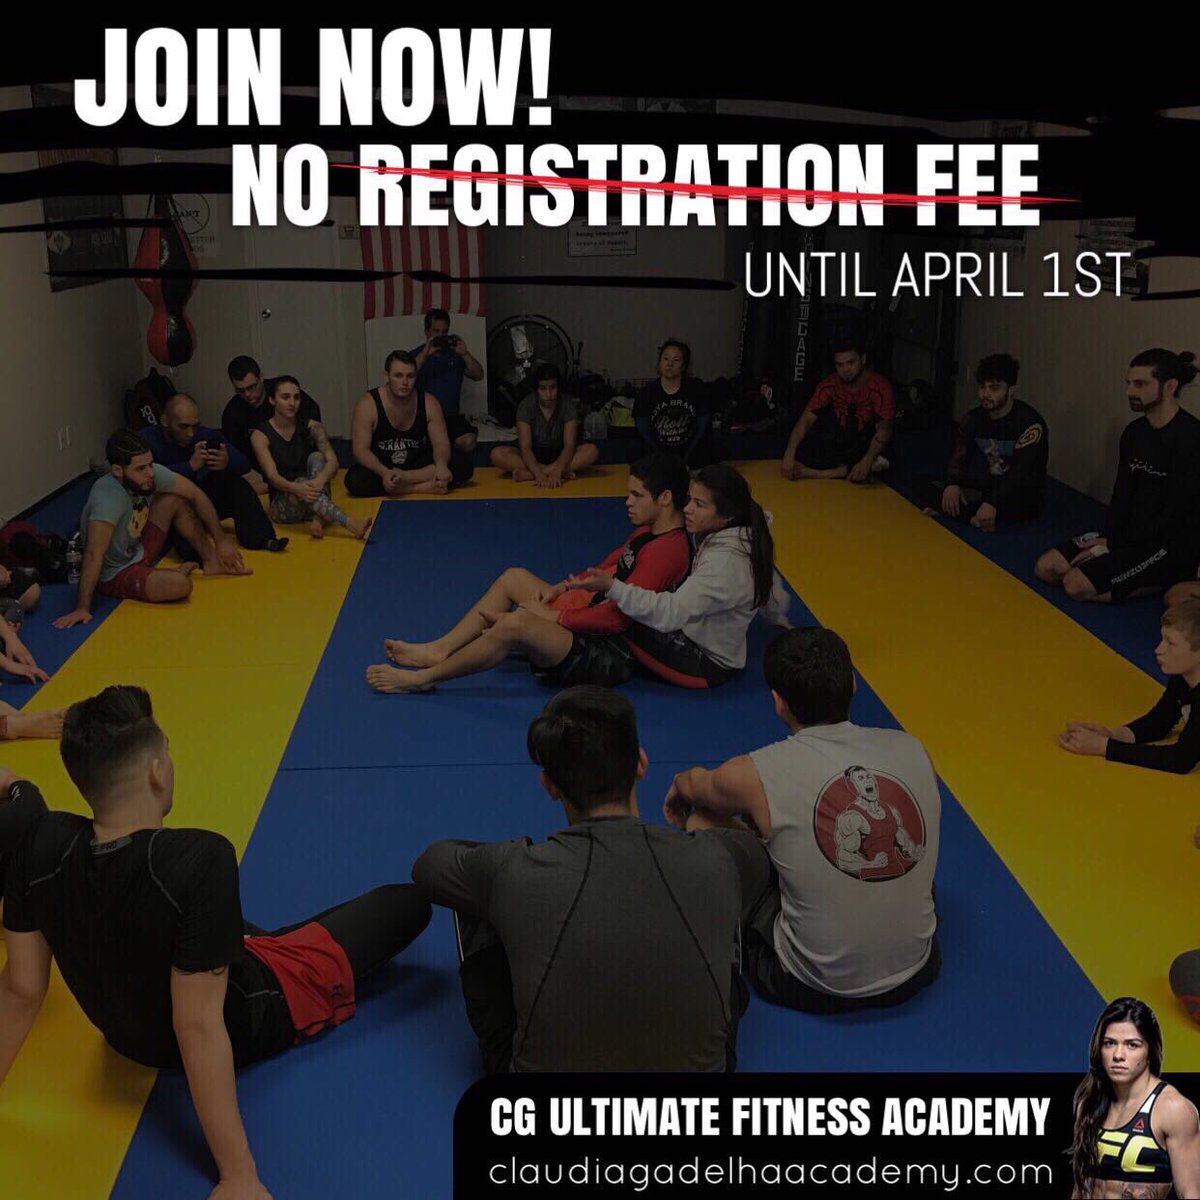 Join now!
No registration fee until April 1st. 😊
#teamclaudia #bjj #mma #boxing #nogi #mmaconditioning #cgfitness #randolphnj #newjersey